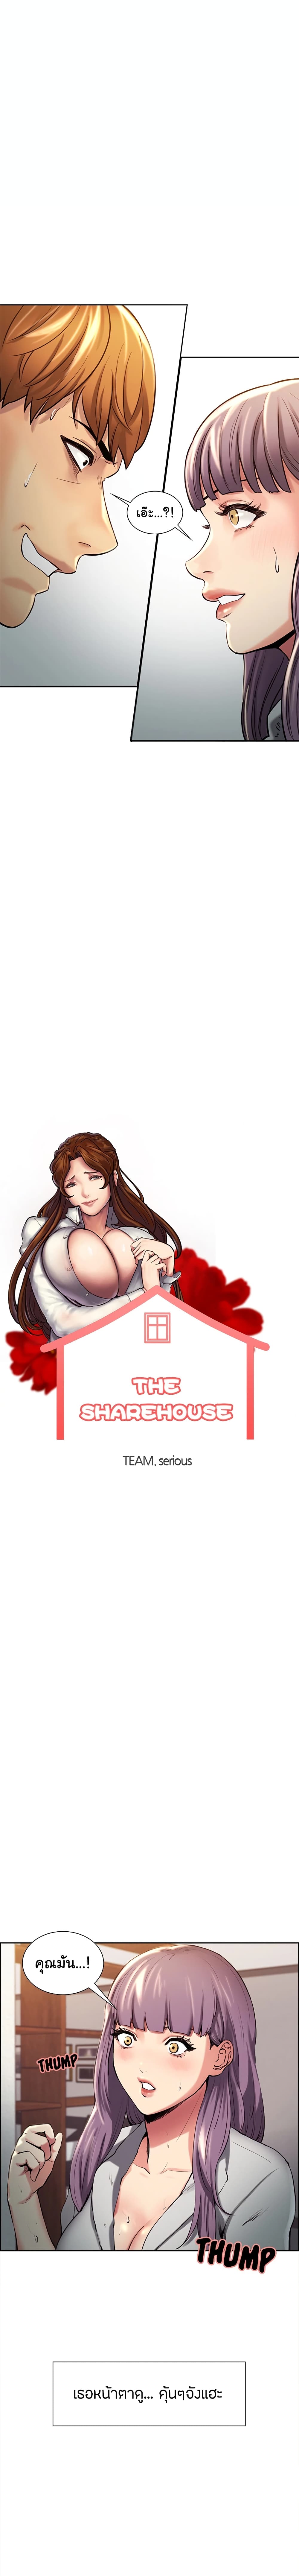 The Sharehouse 23 (1)